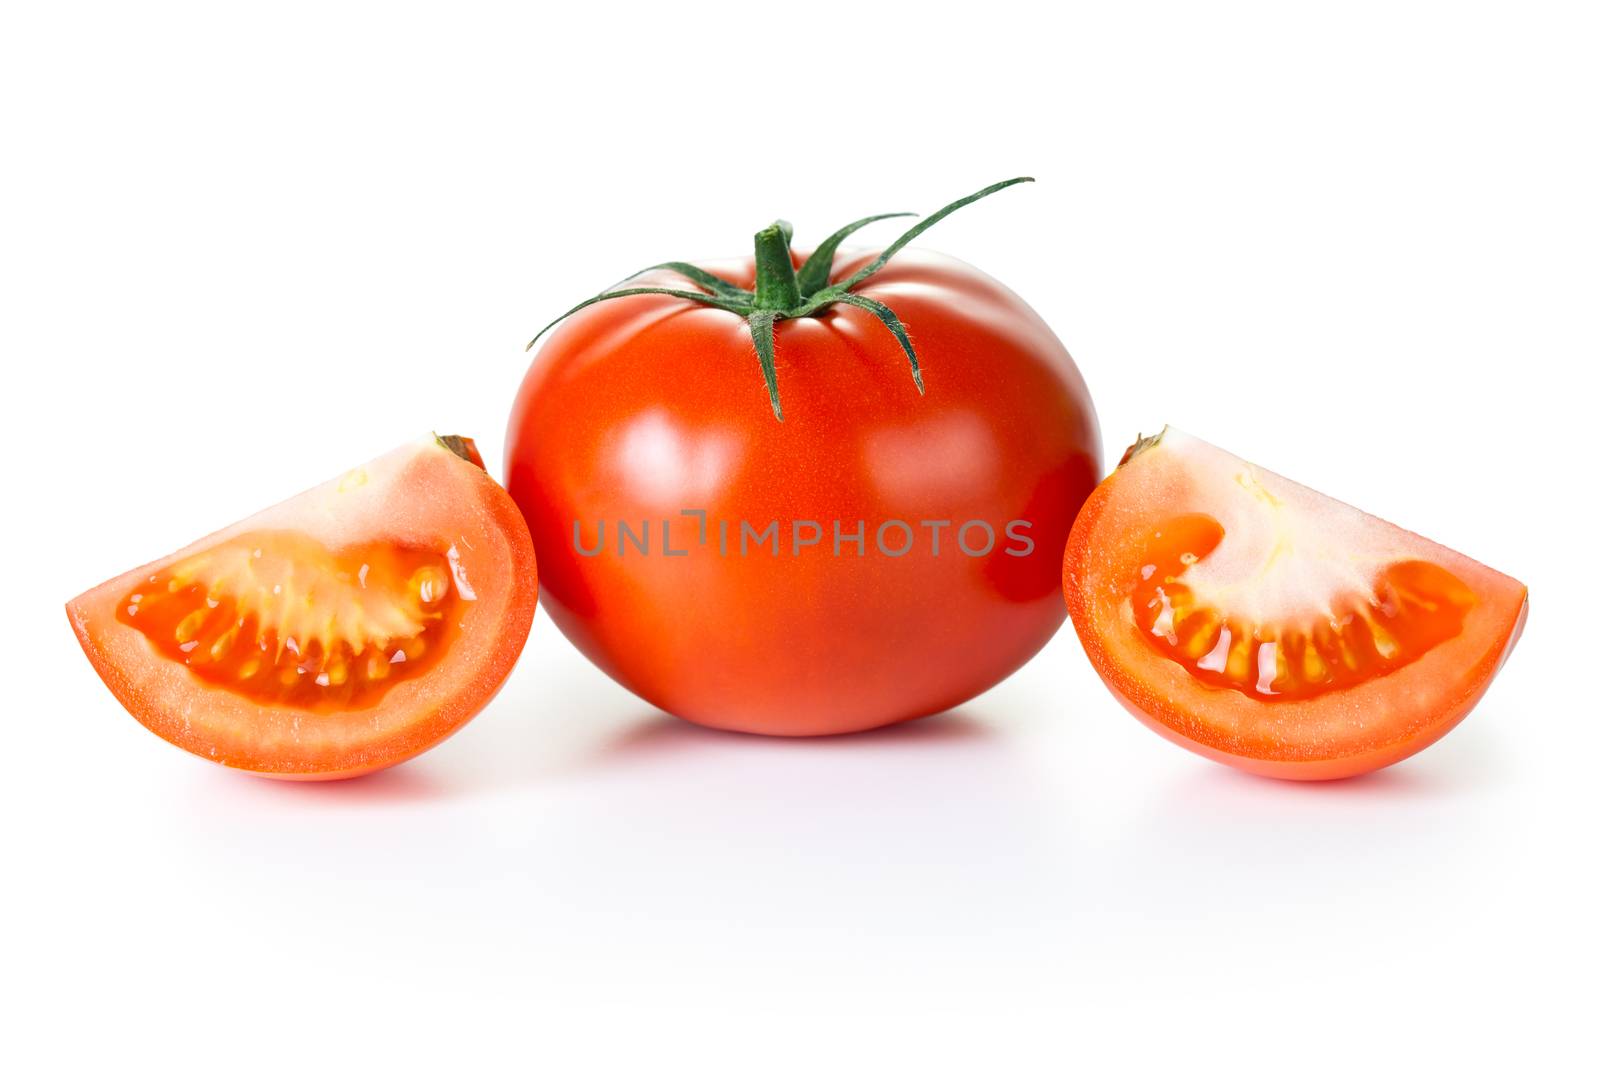 Tomato by bozena_fulawka